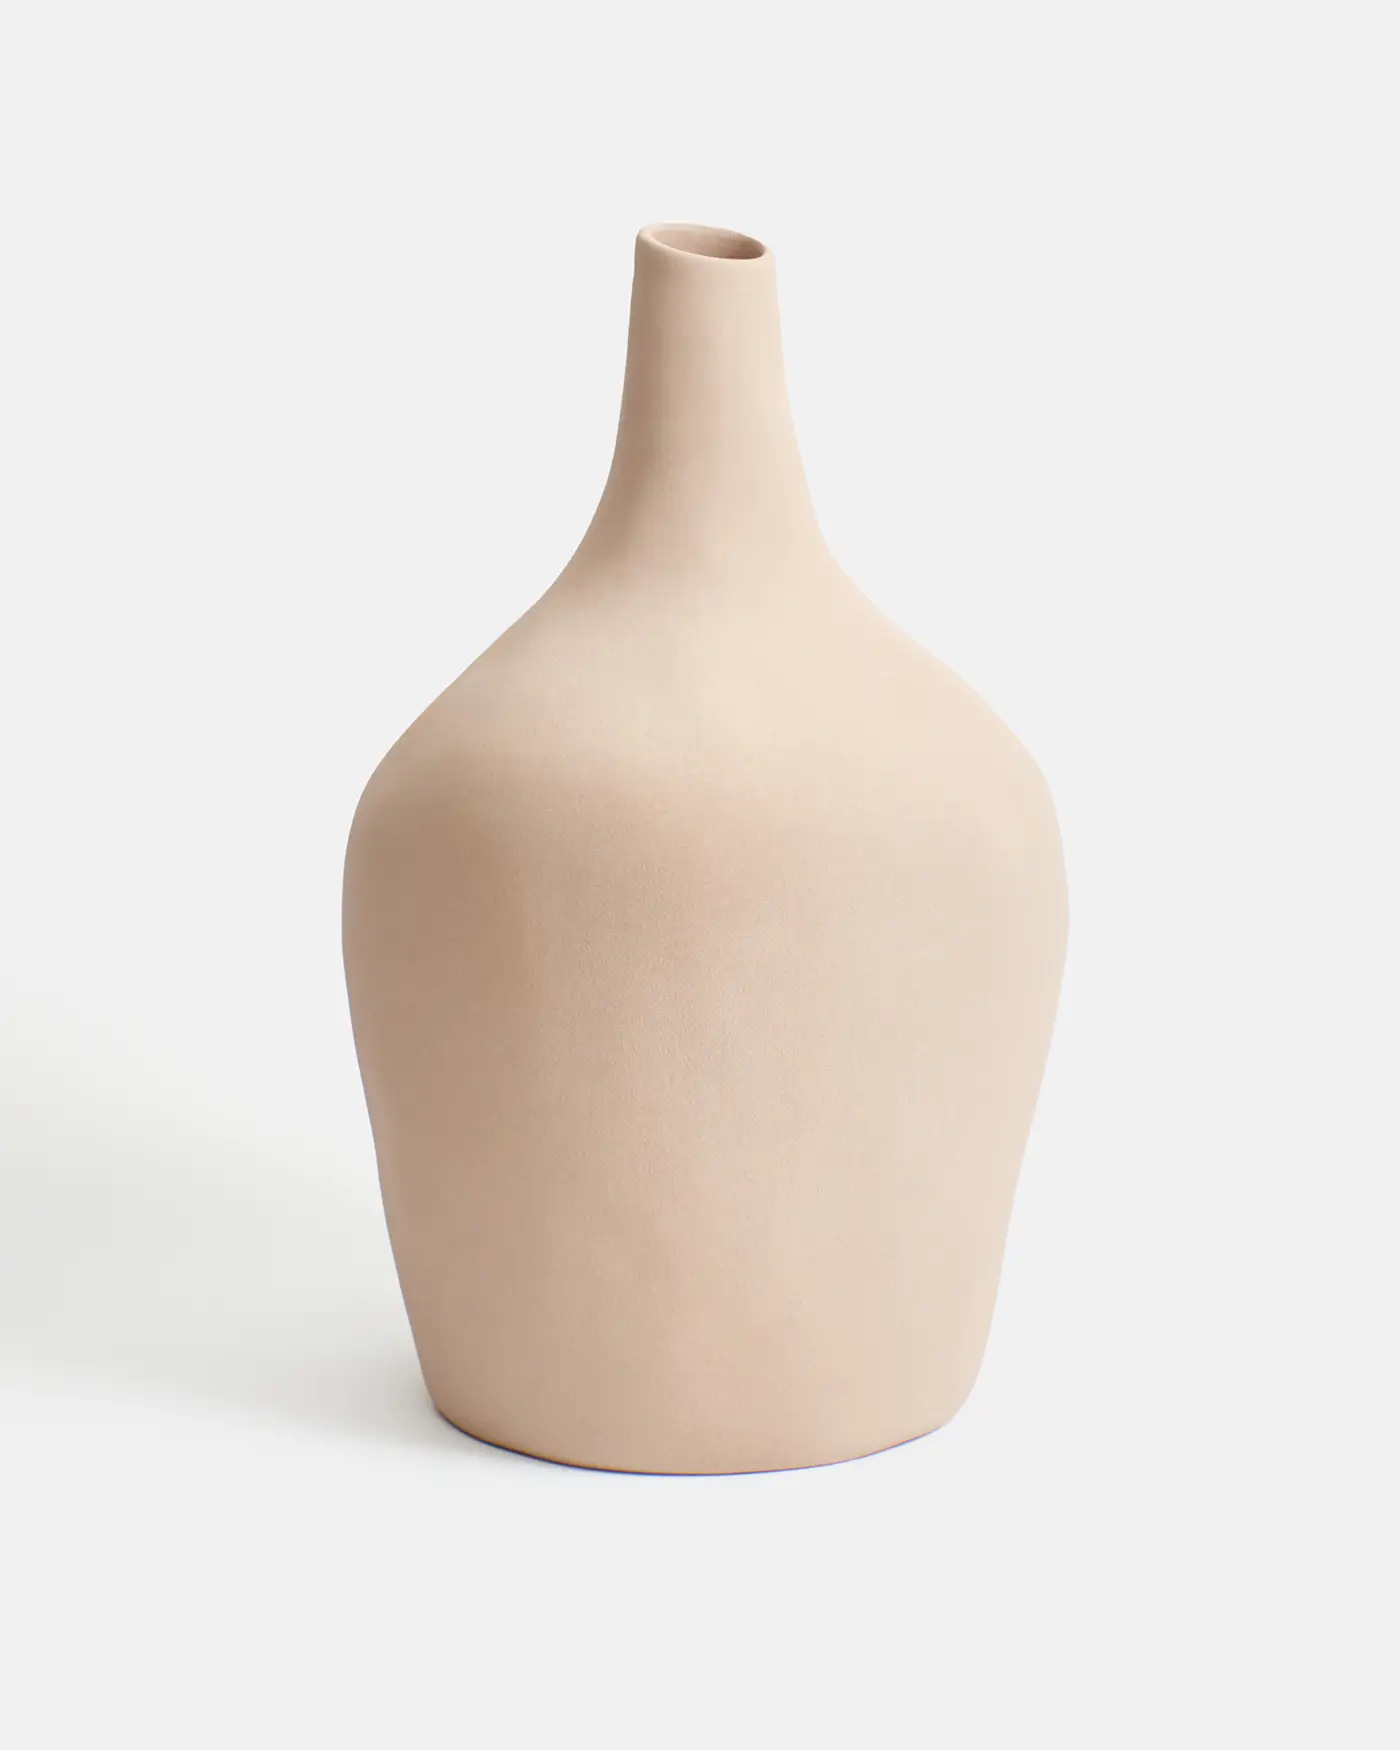 Projet 213A - Sailor Vase